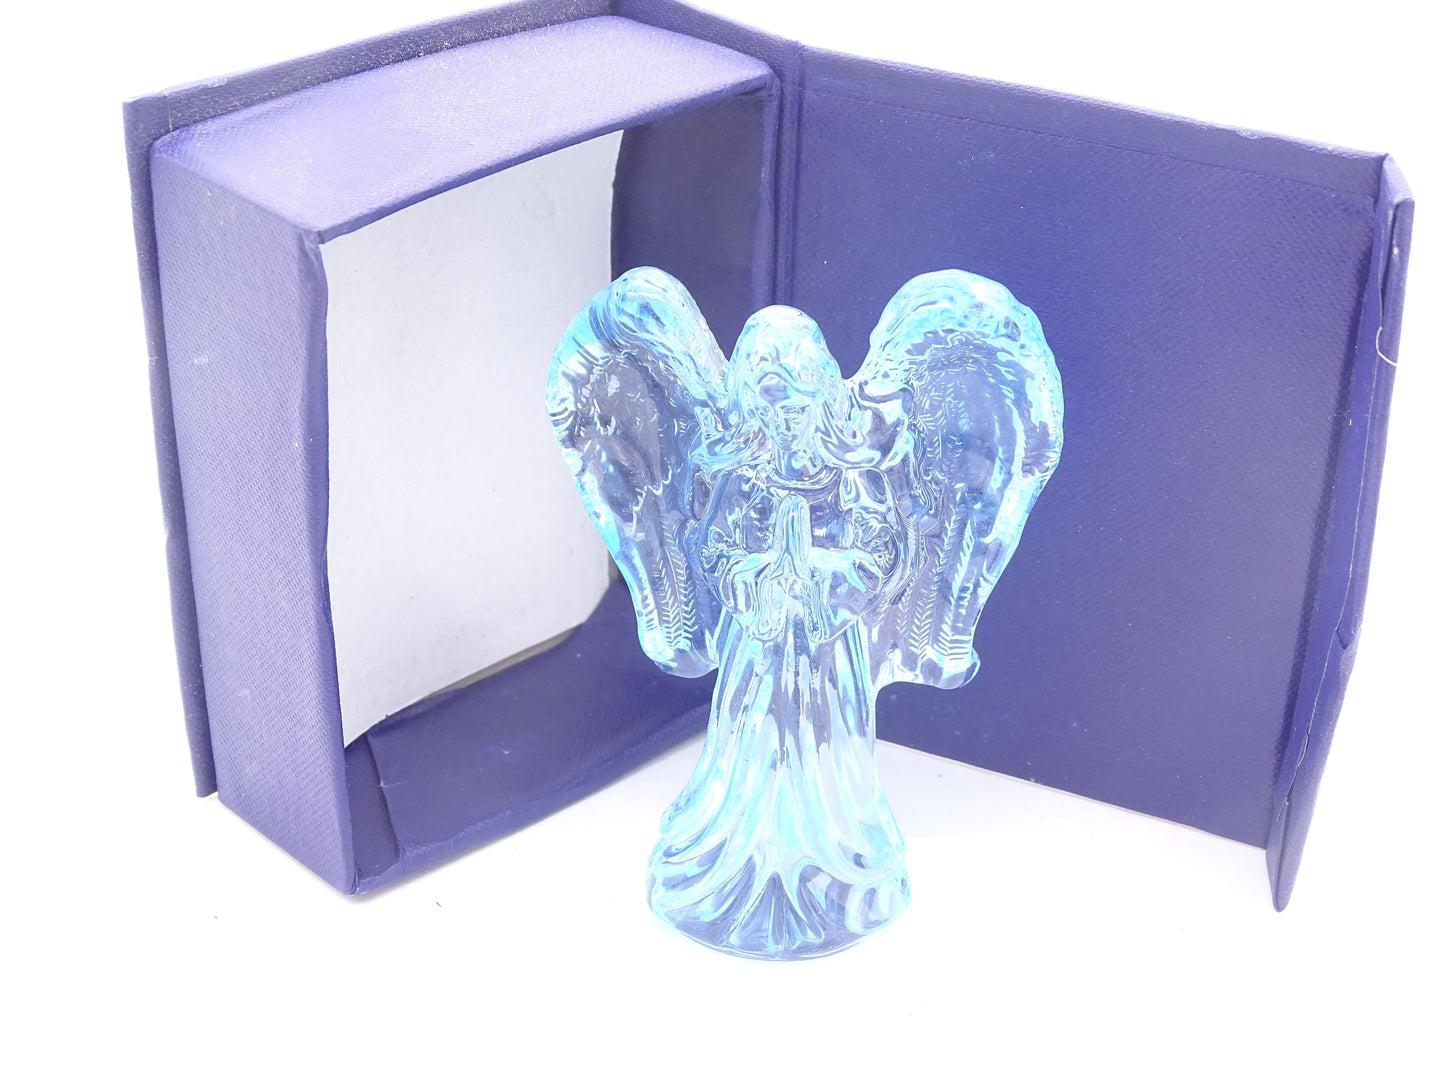 Praying angel made of blue crystal glass